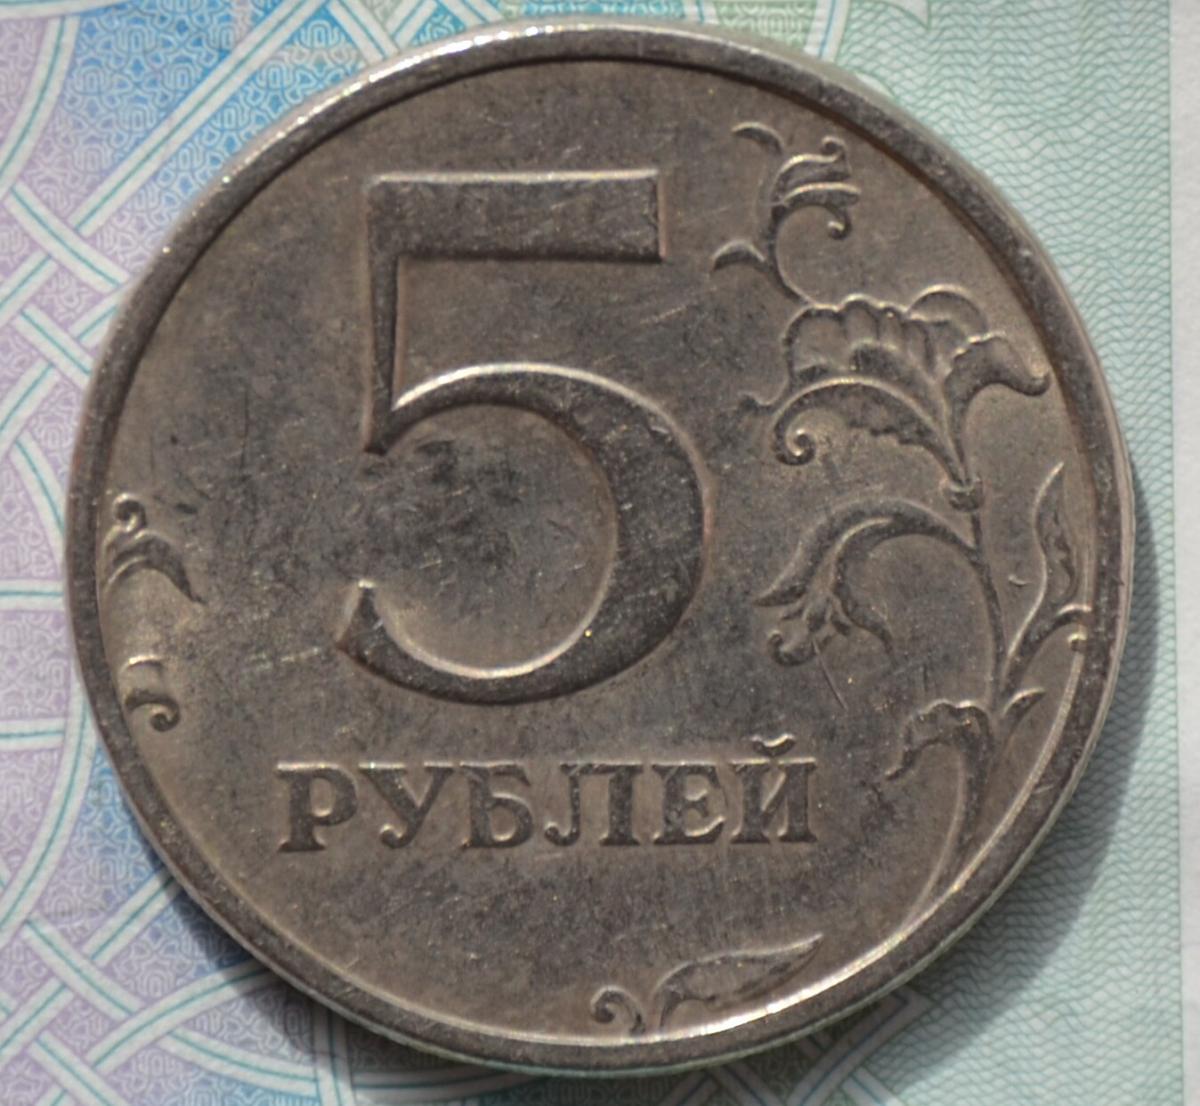 5 160 в рубли. Редкая монета 5 рублей 1998 года. Редкая Монетка пять рублей 1998 года. 5 Рублей 1998 СПМД редкая. Редкие монет 1997.